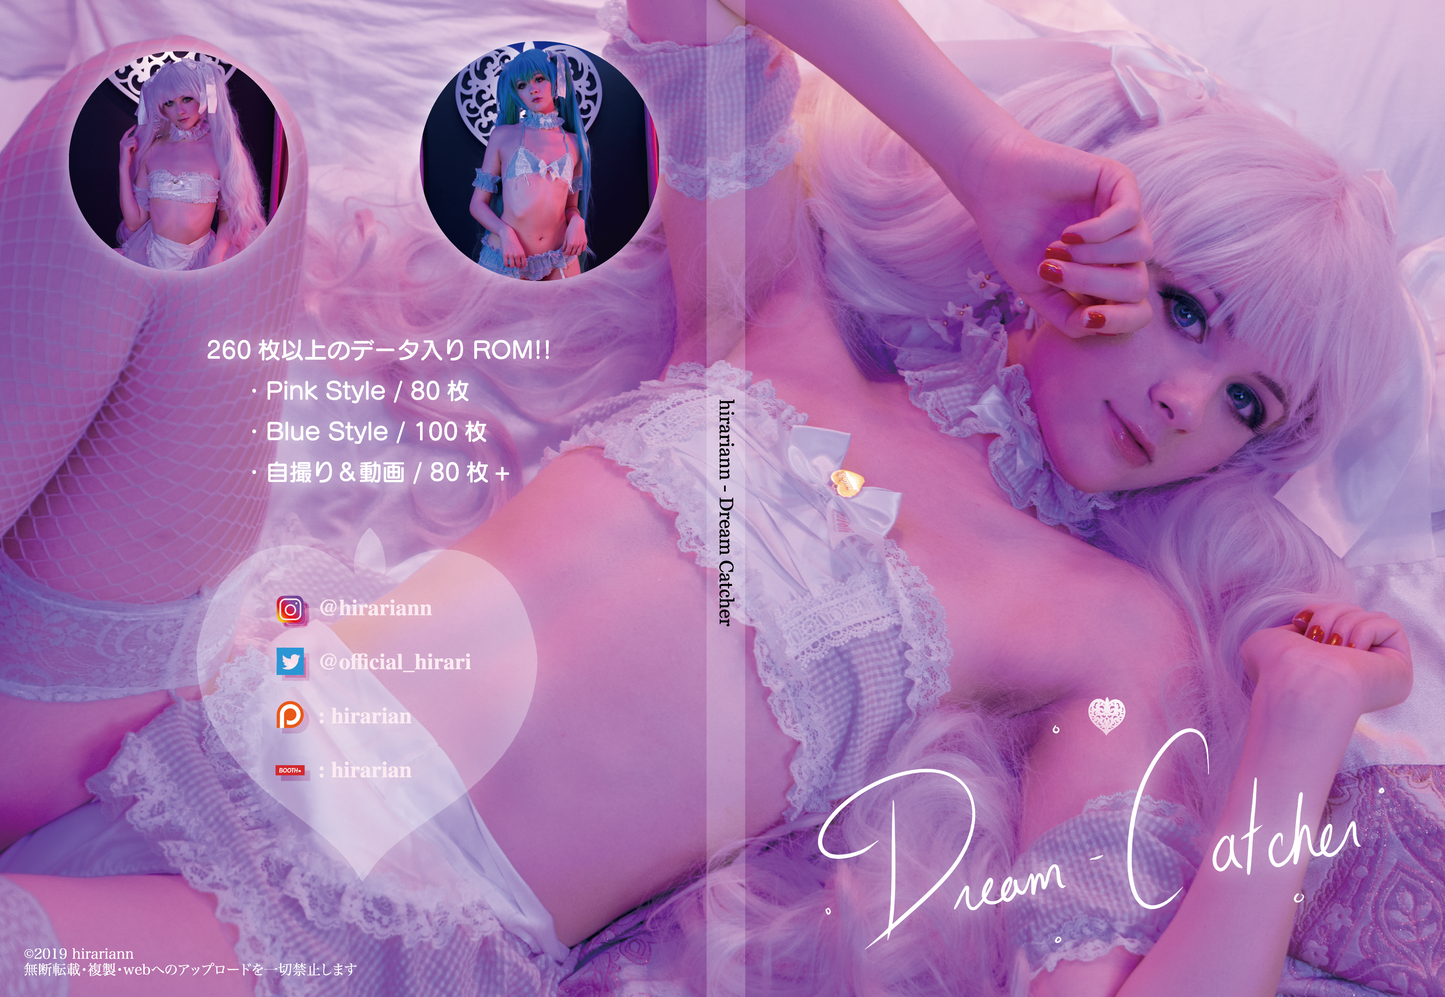 DREAM ✰ CATCHER Collectors Edition